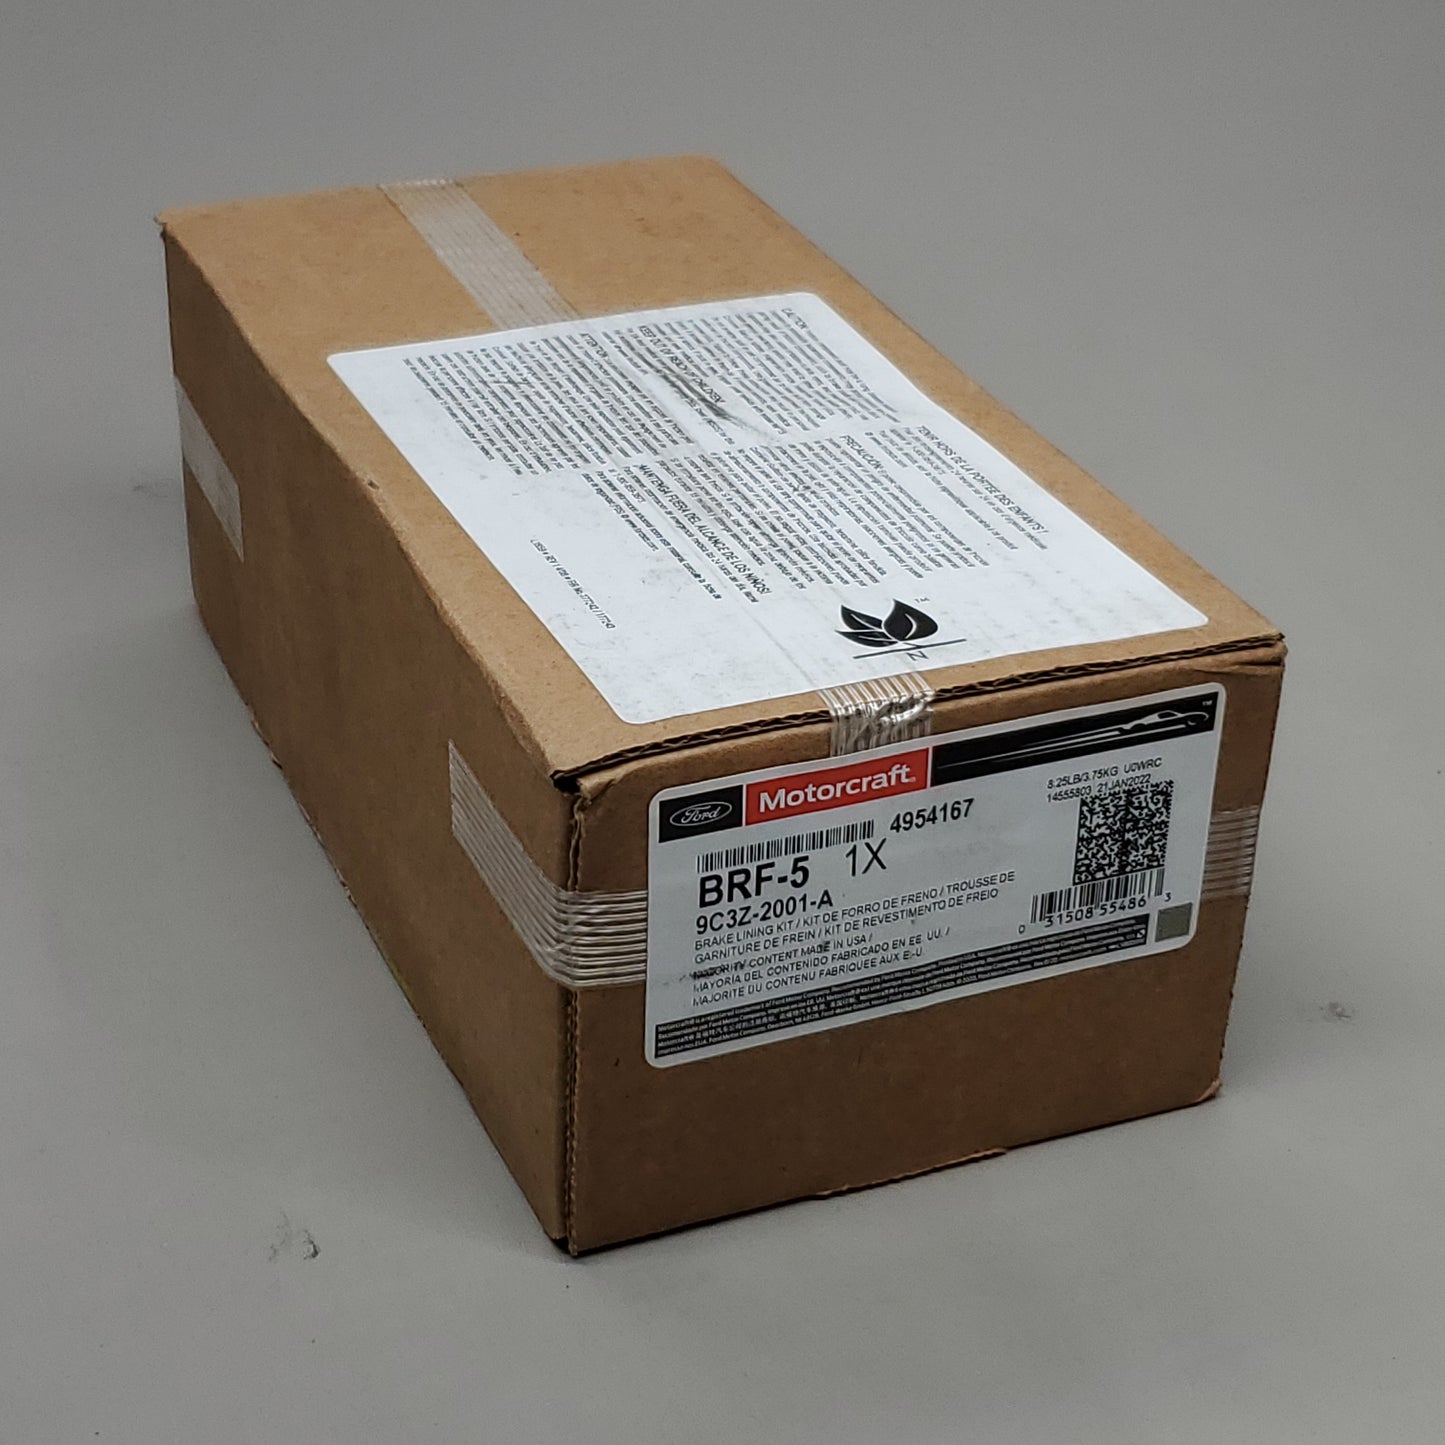 FORD MOTORCRAFT Disc Brake Lining Kit Pad Set Front F450 F550 Super Duty BRF-5 9C3Z-2001-A (New)